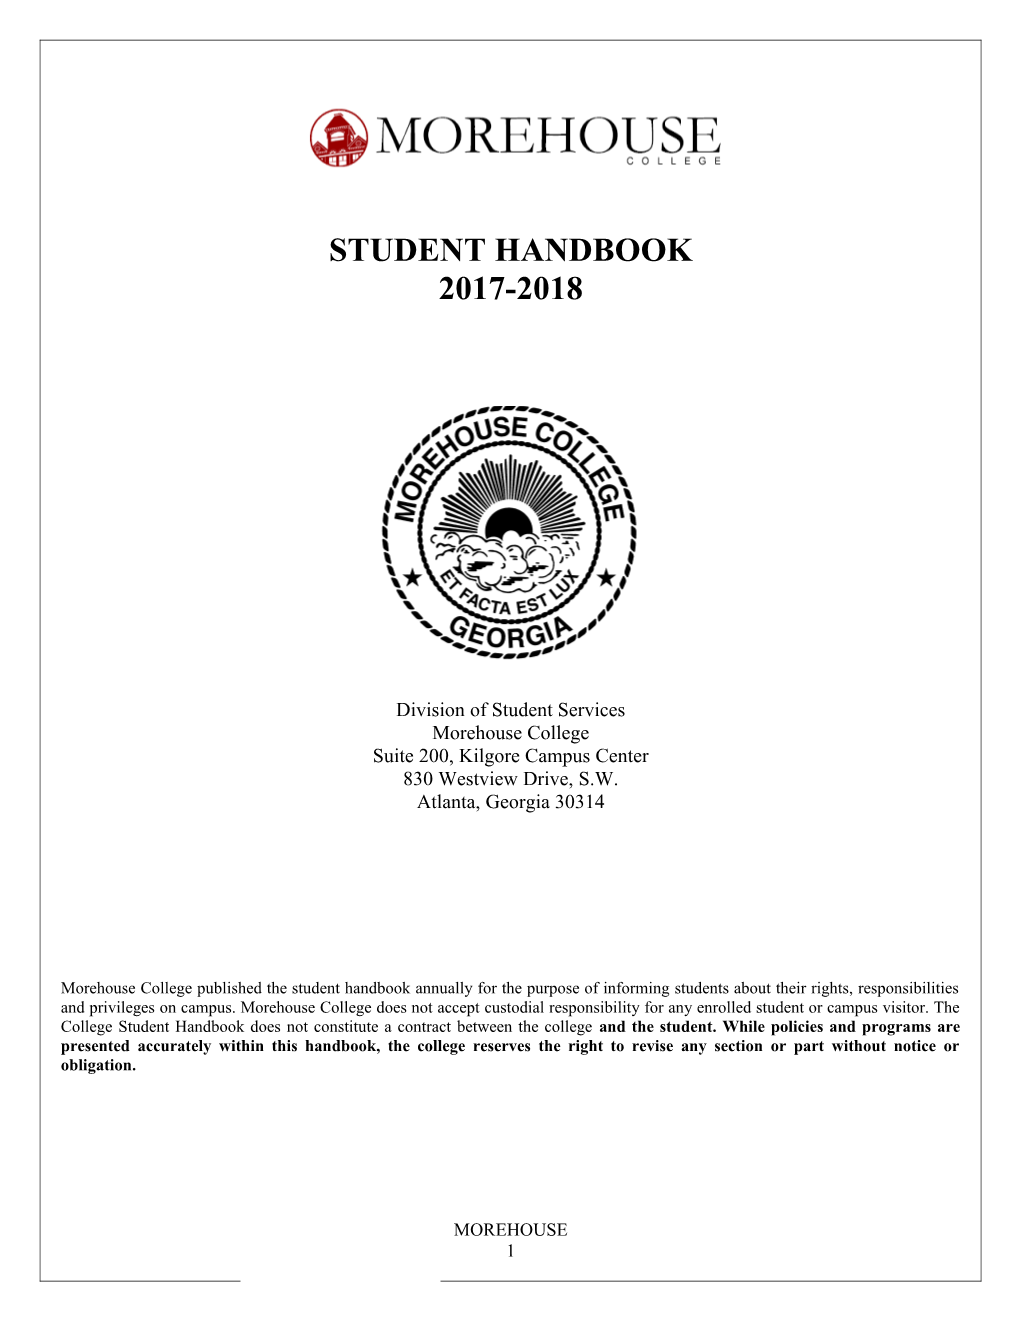 Student Handbook s1